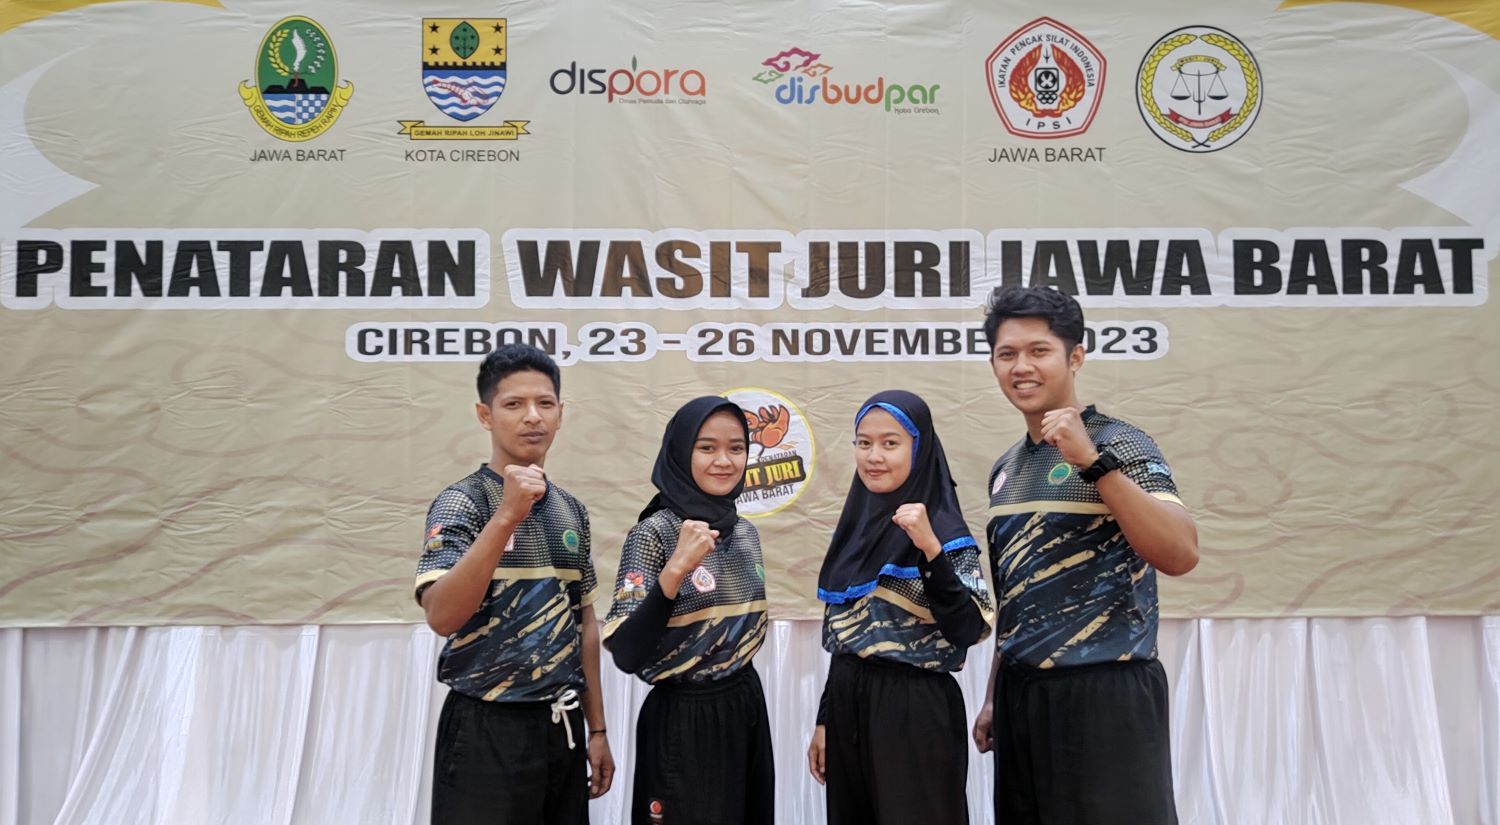 4 Anggota PBSS Kuningan lulus kenaikan Grade III Wasit Juri Pencak Silat Jawa Barat tahun 2023.